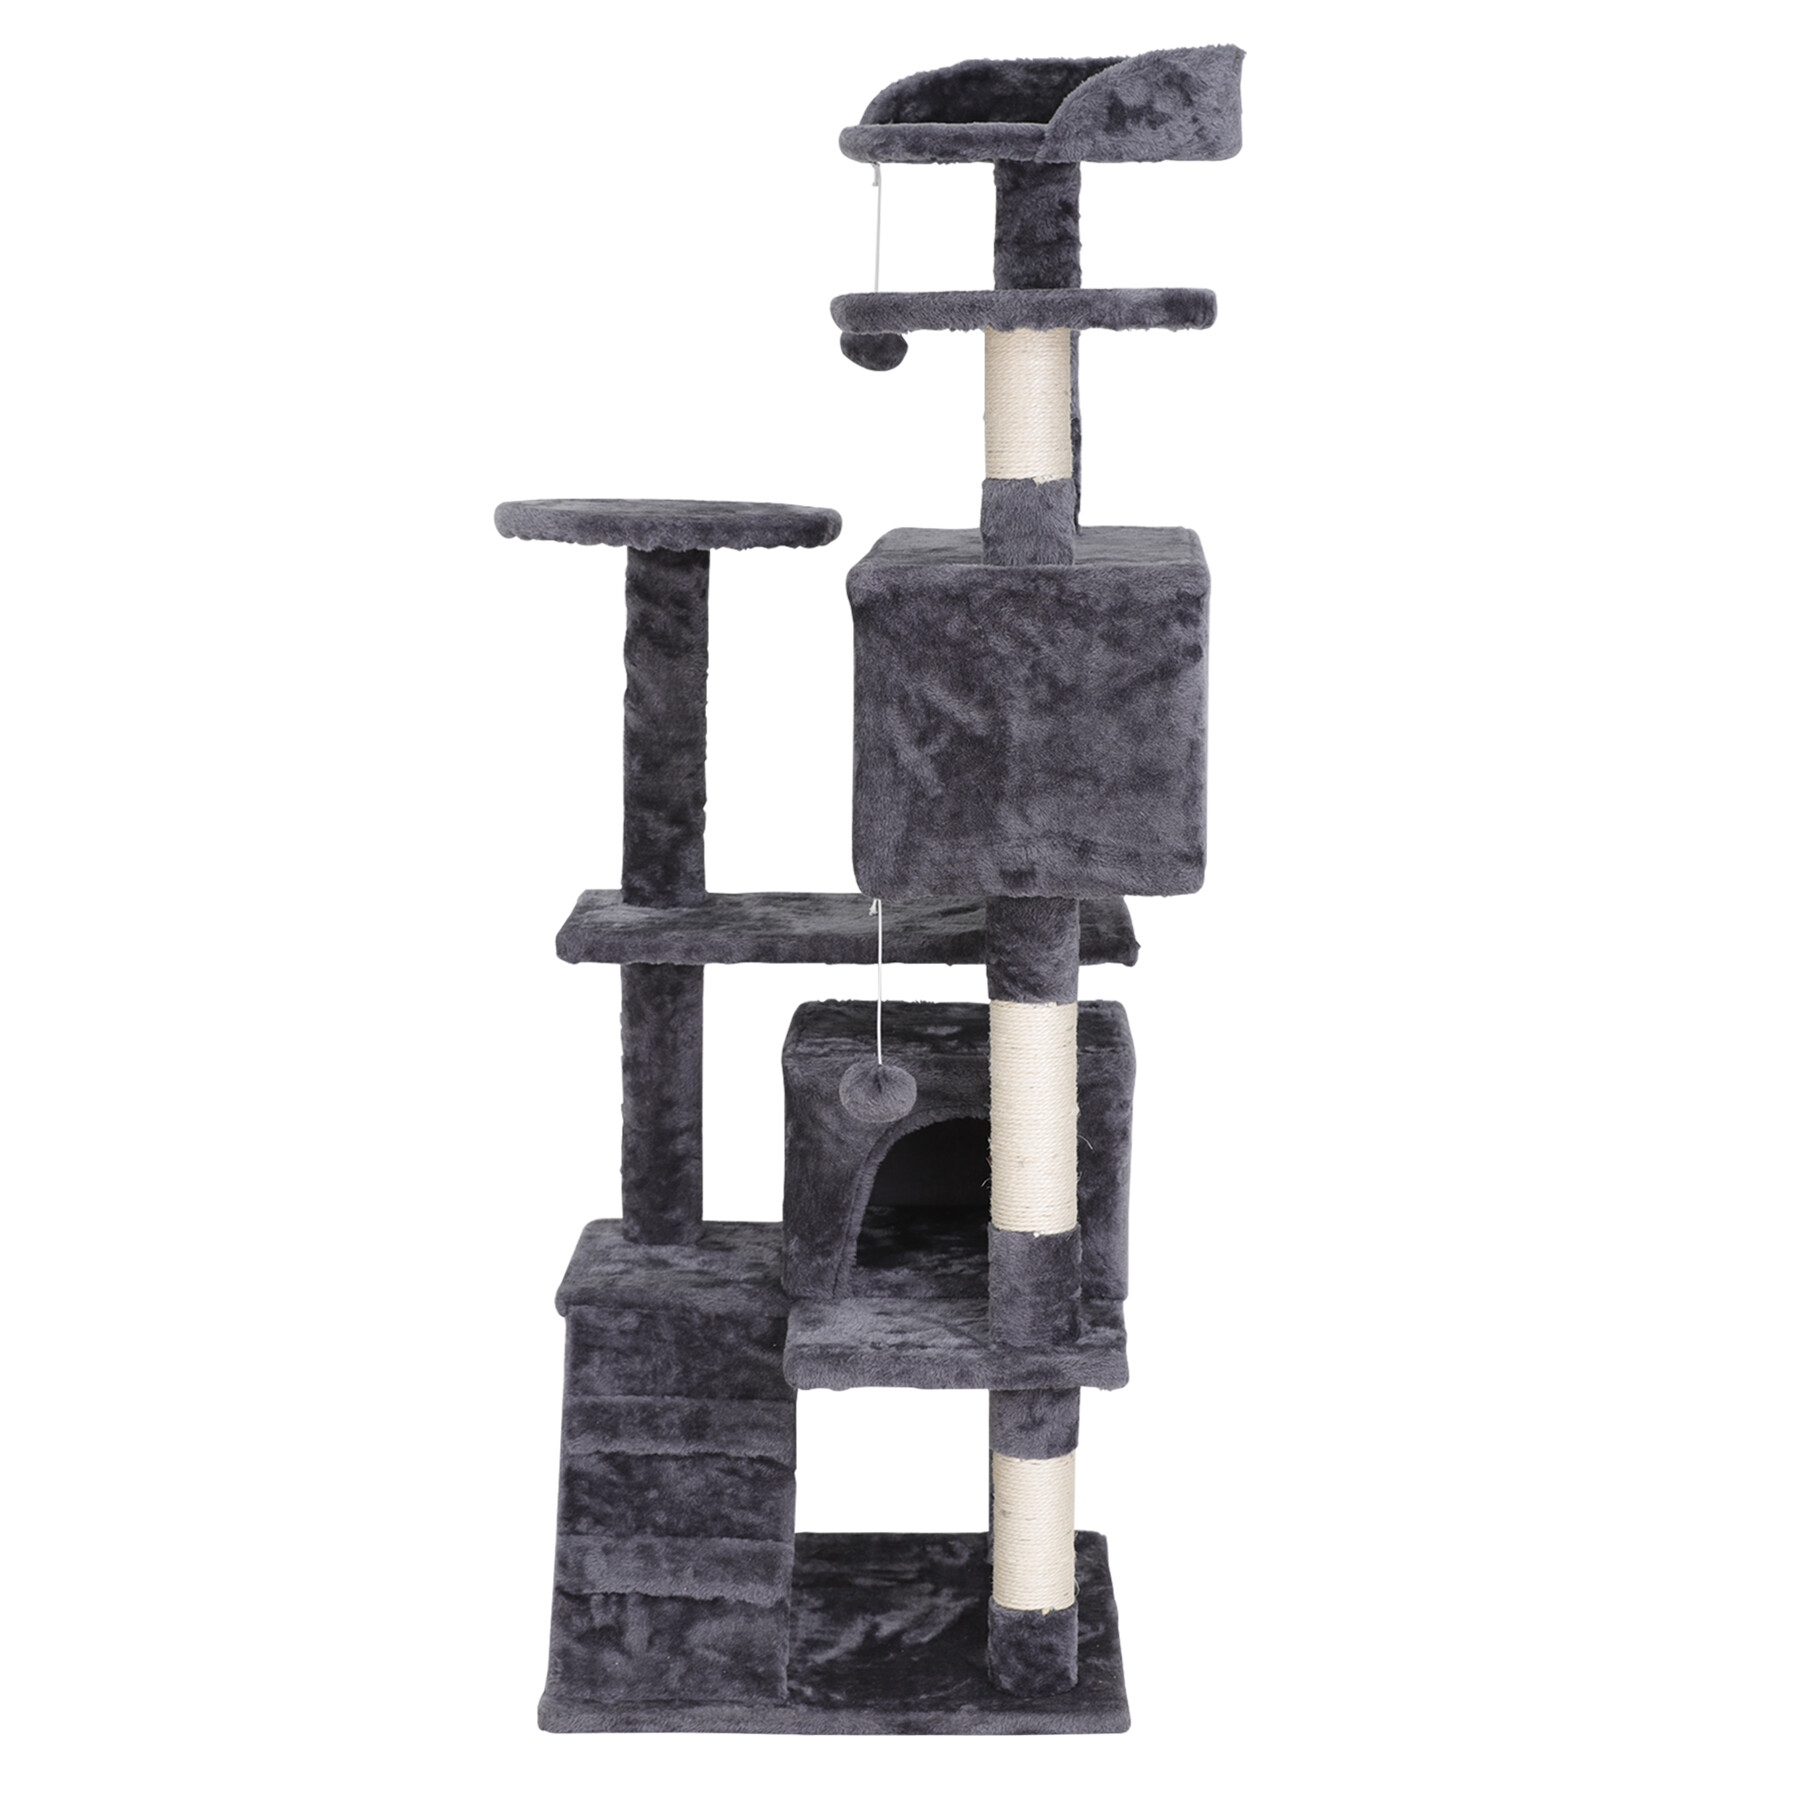 Zenstyle 53-in Cat Tree & Condo Scratching Post Tower, Dark Gray - image 8 of 14